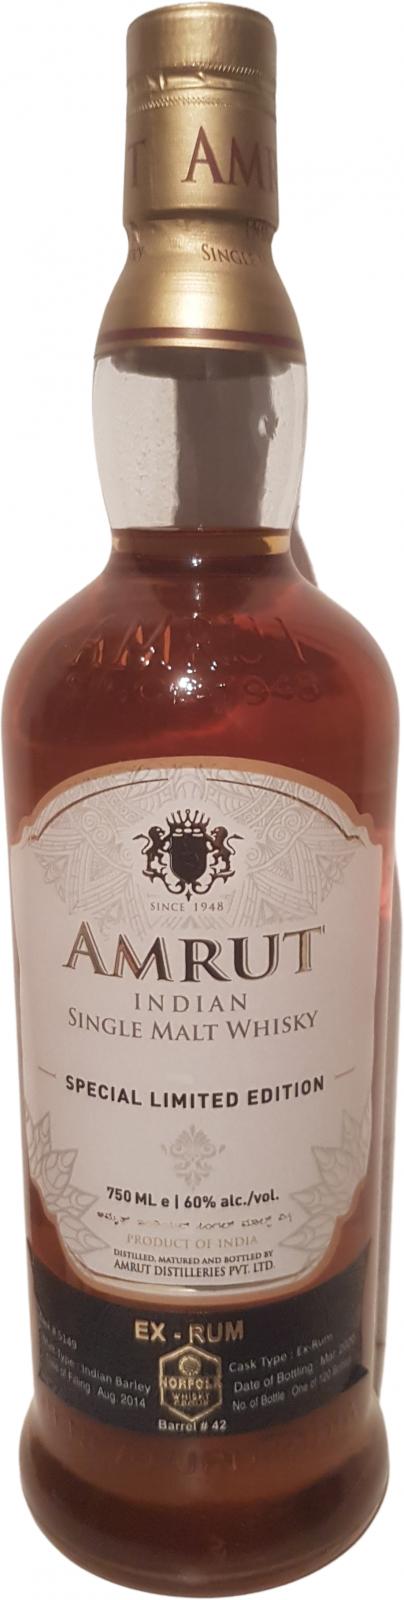 Amrut 2014 Special Limited Edition Ex-Rum 5149 Norfolk Wine & Spirit U.S.A 60% 750ml